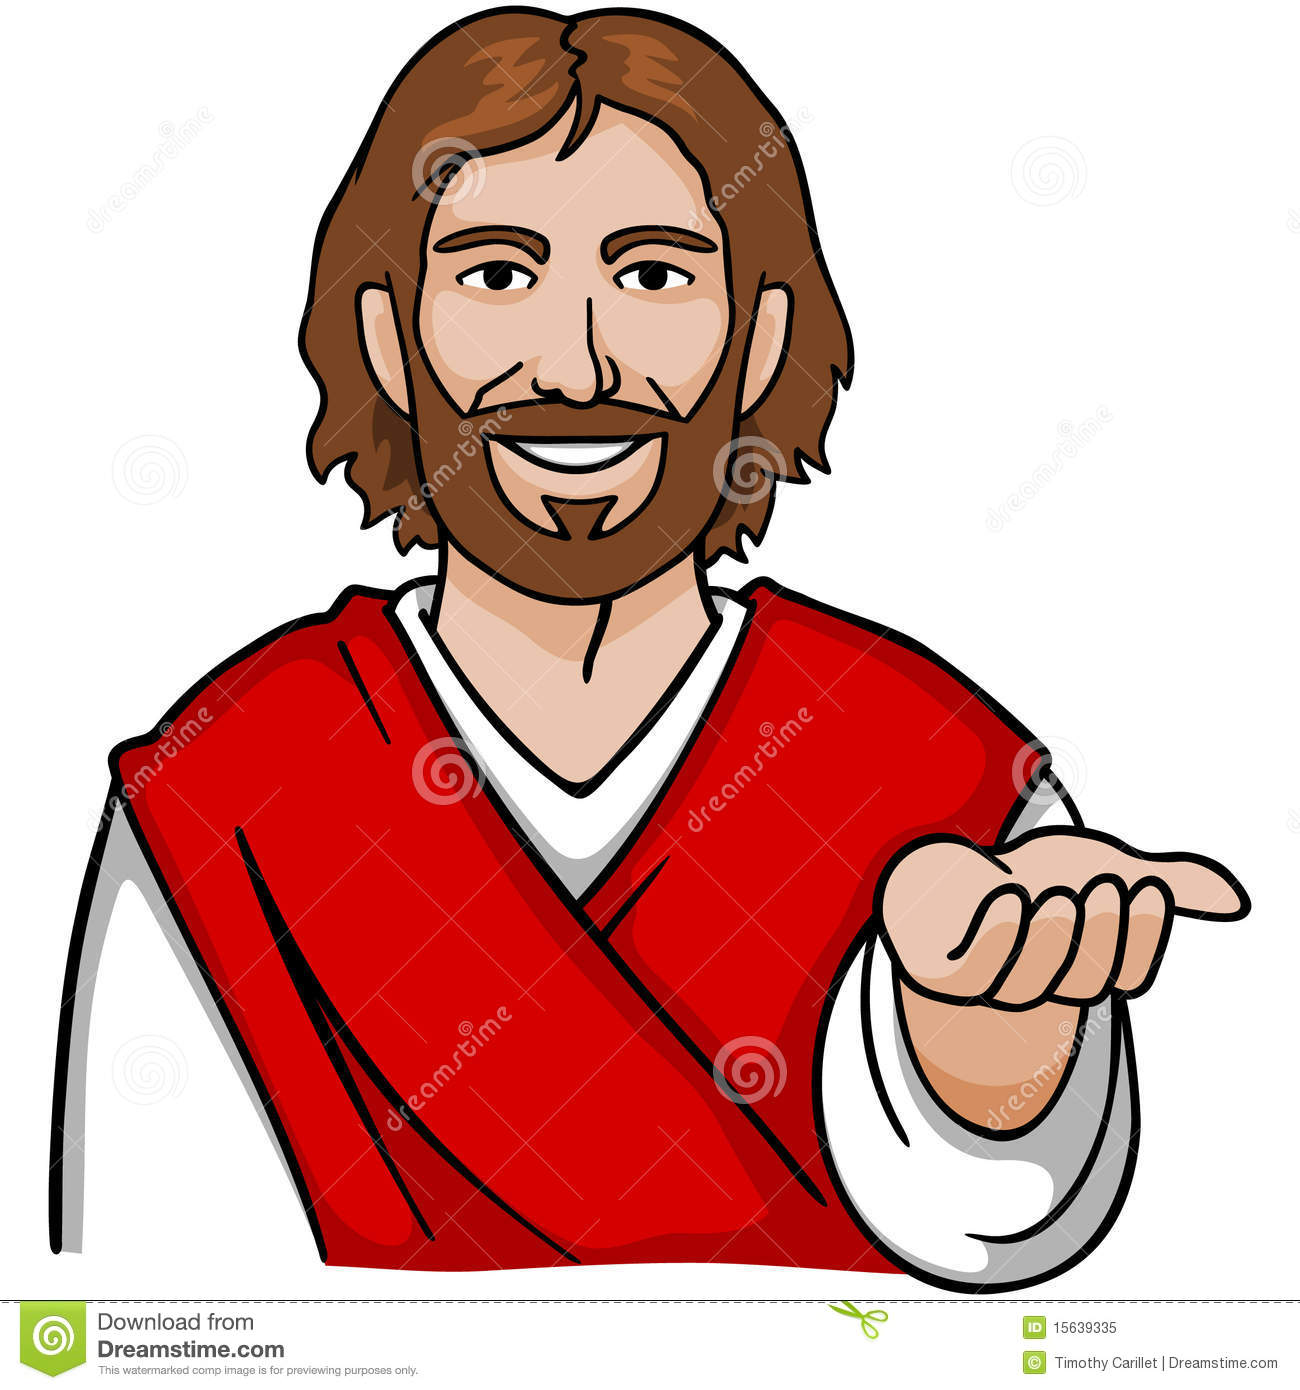 Jesus clipart #14, Download drawings